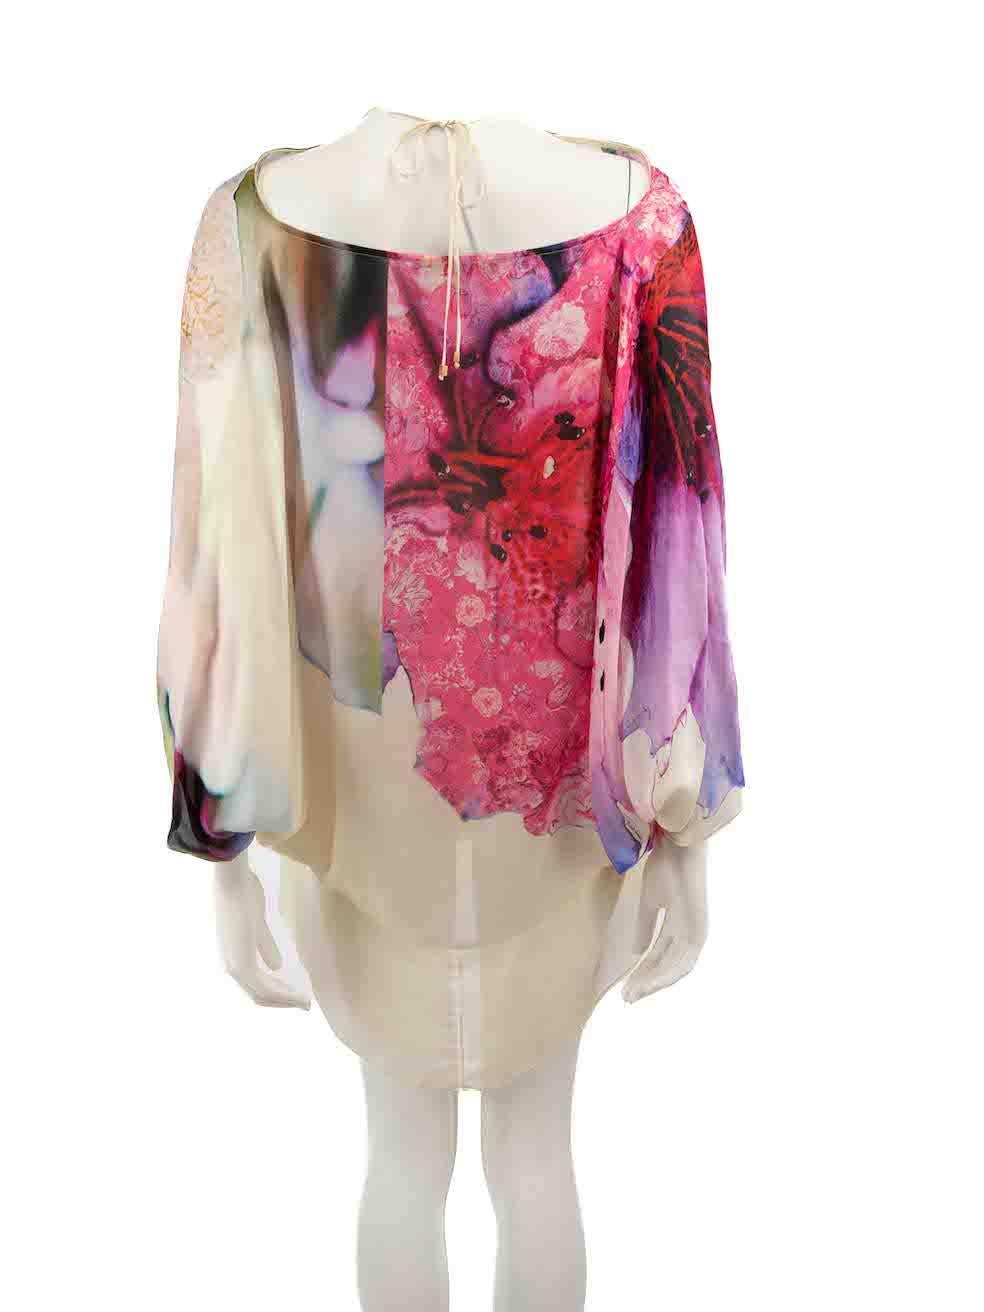 Roberto Cavalli Floral Silk Mini Beach Dress Size S In Excellent Condition For Sale In London, GB